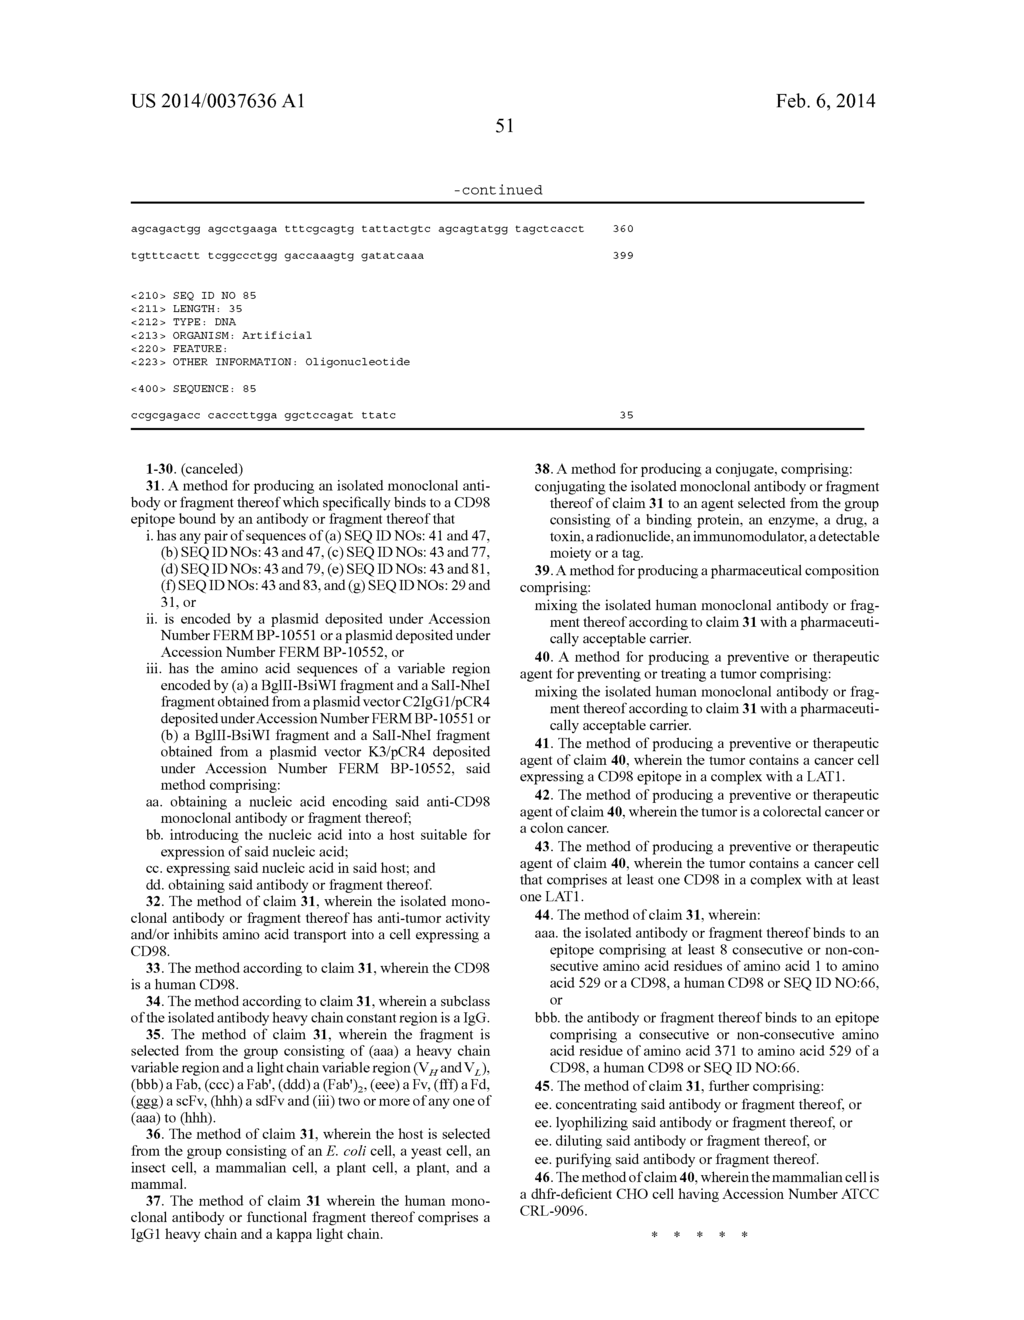 ANTI-CD98 ANTIBODY PROCESSES - diagram, schematic, and image 75